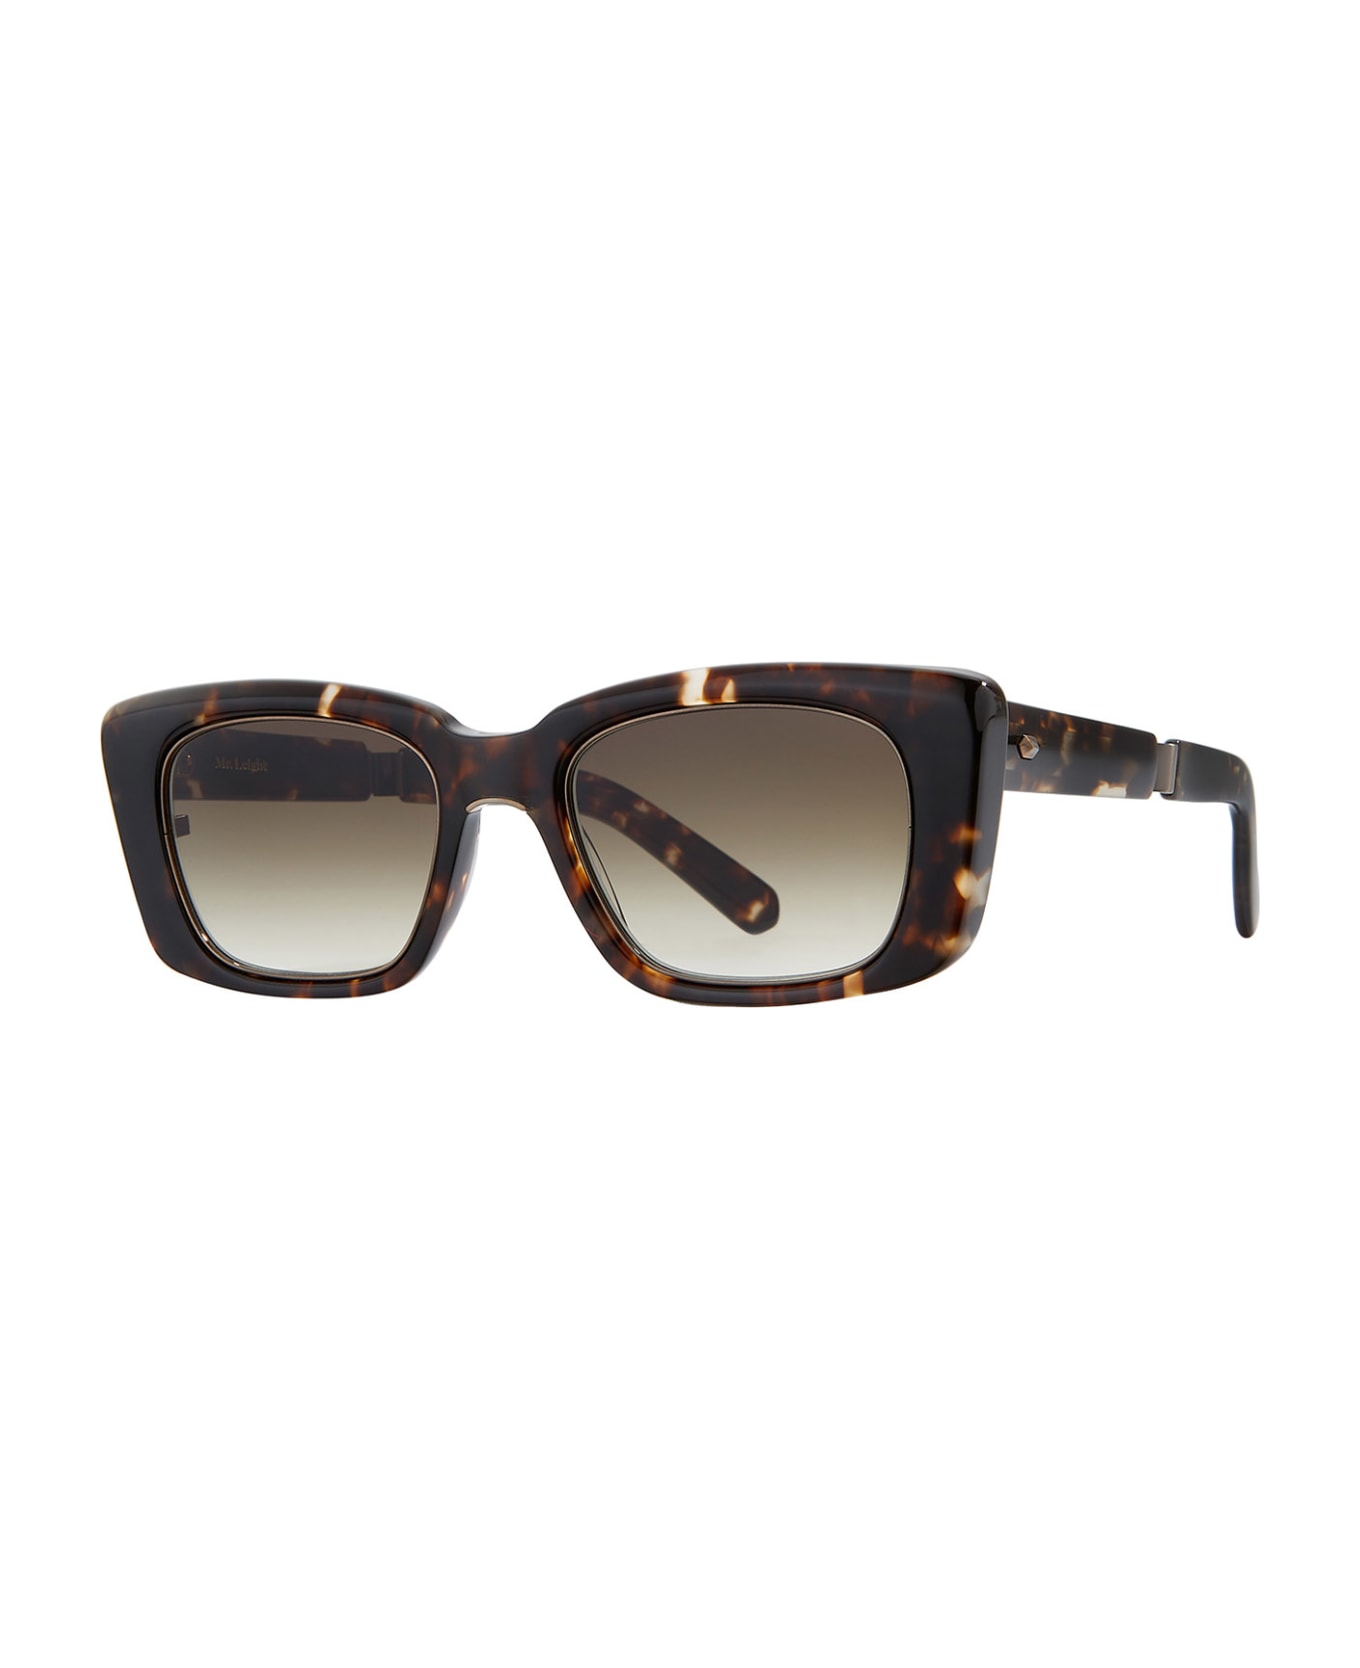 Mr. Leight Carman S Leopard Tortoise Sunglasses - Leopard Tortoise